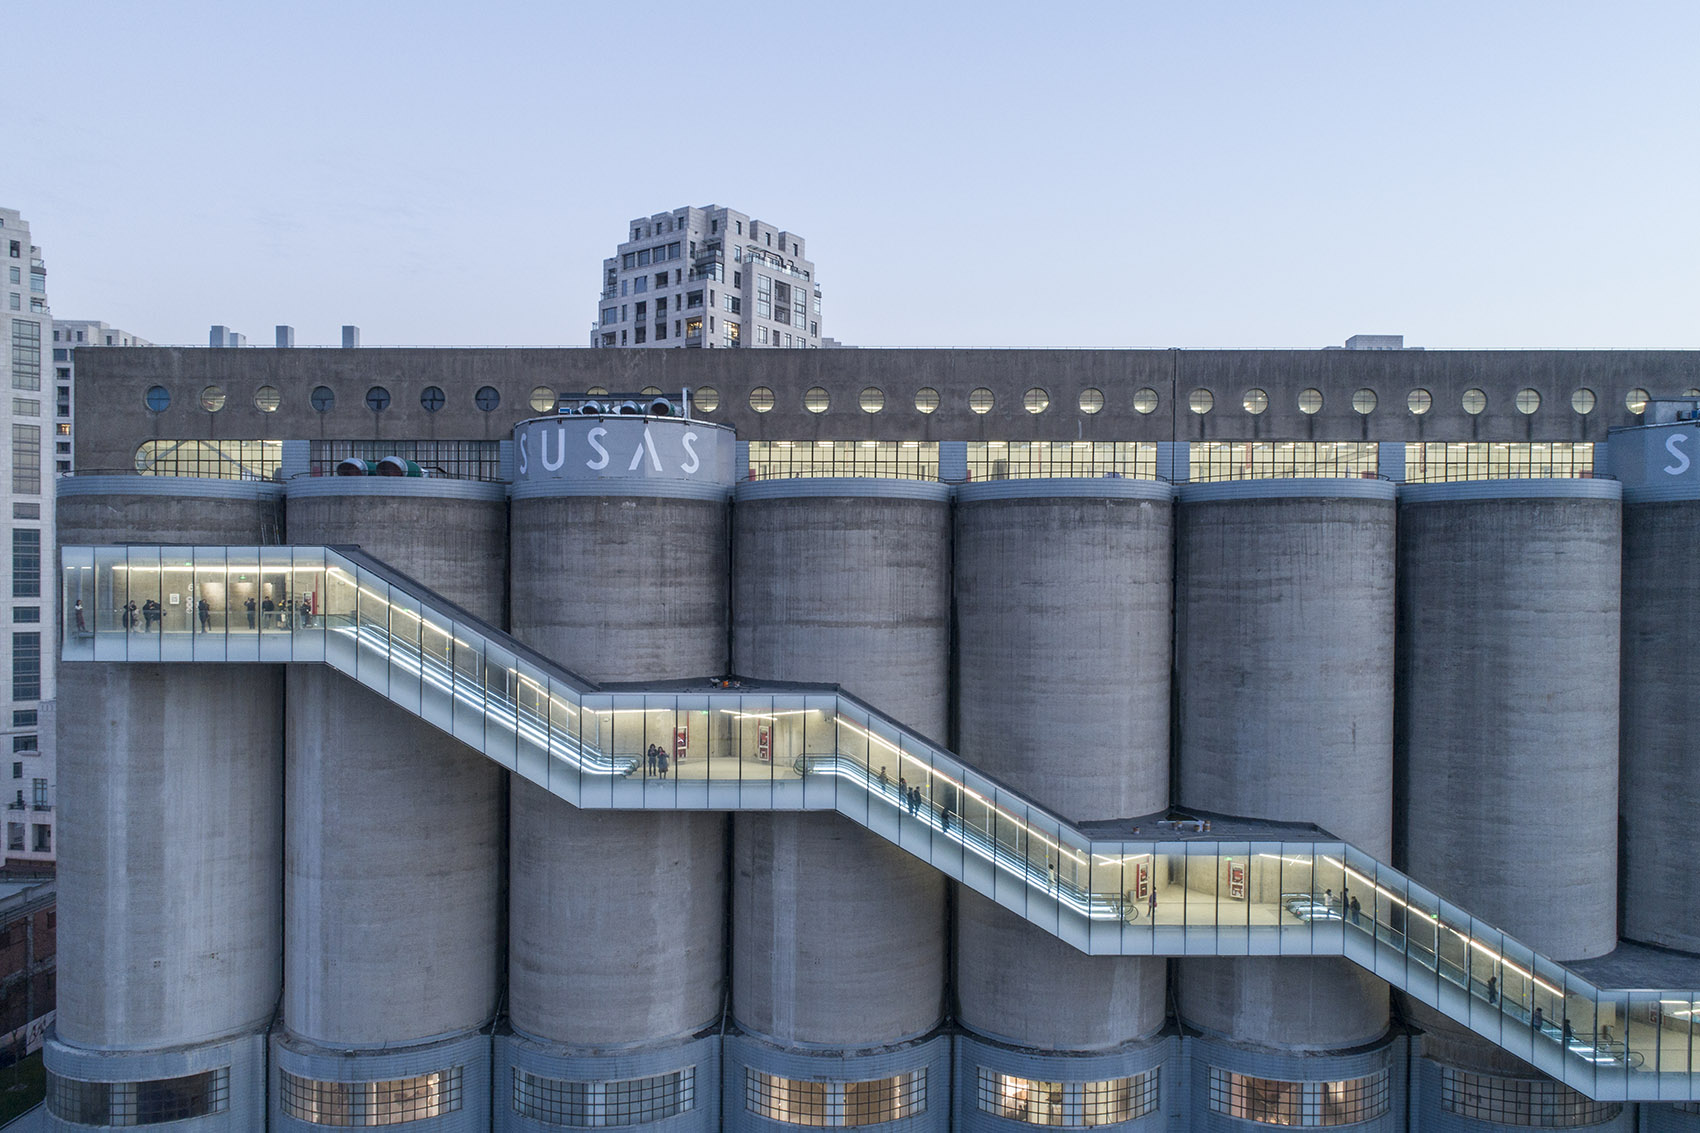 025-renovation-of-80000-ton-silos-on-minsheng-wharf-china-by-atelier-deshaus.jpg